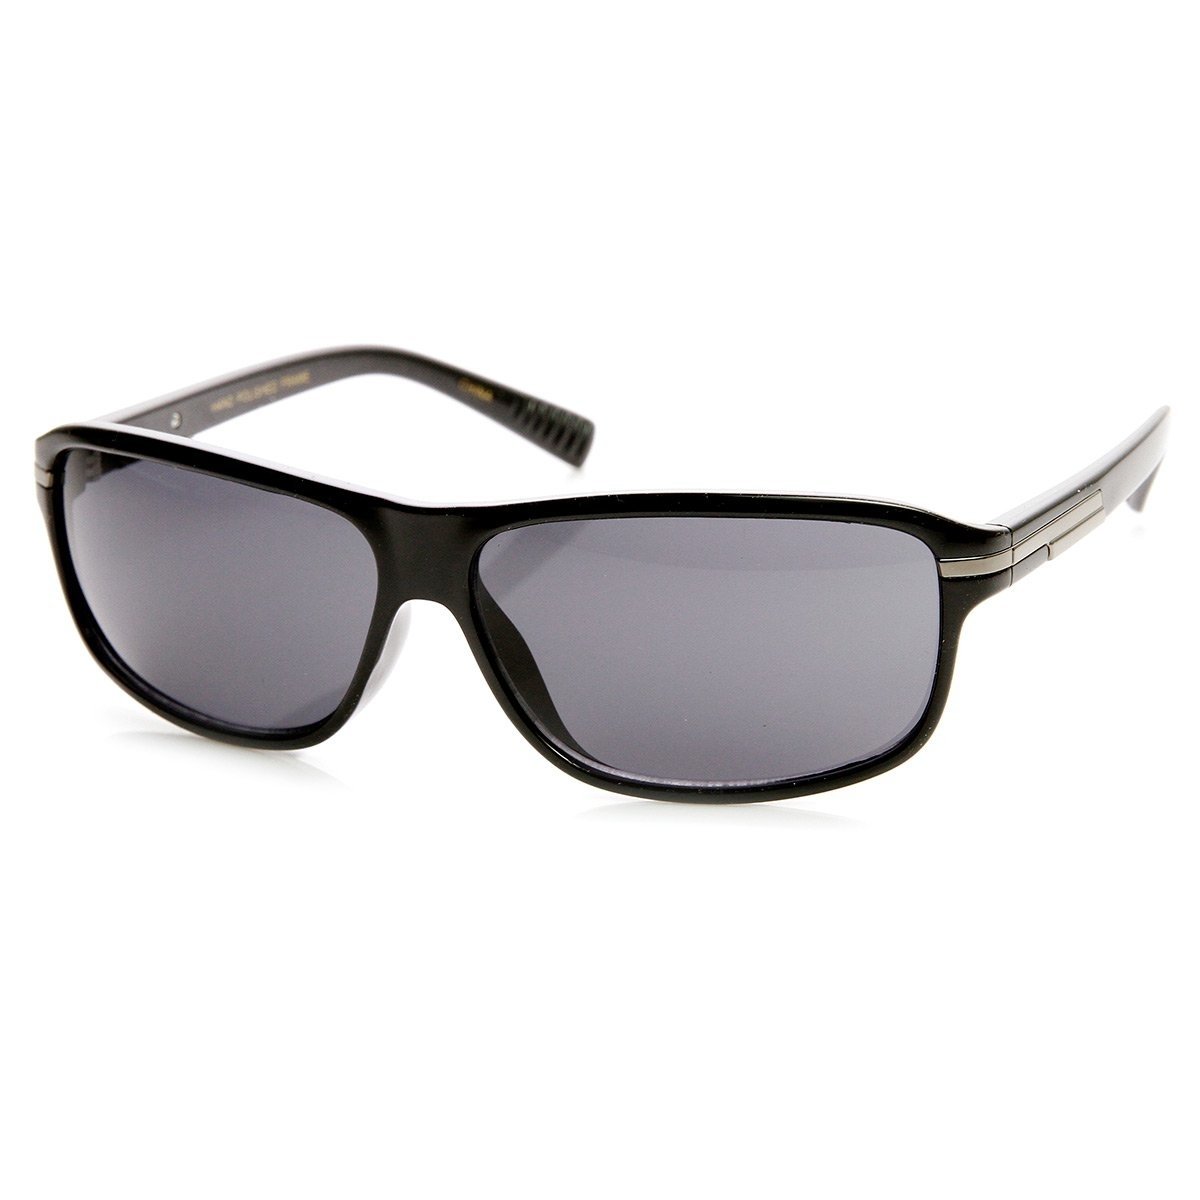 Modern Fashion High Fashion Active Lifestyle Rectangle Sunglasses - Black Smoke